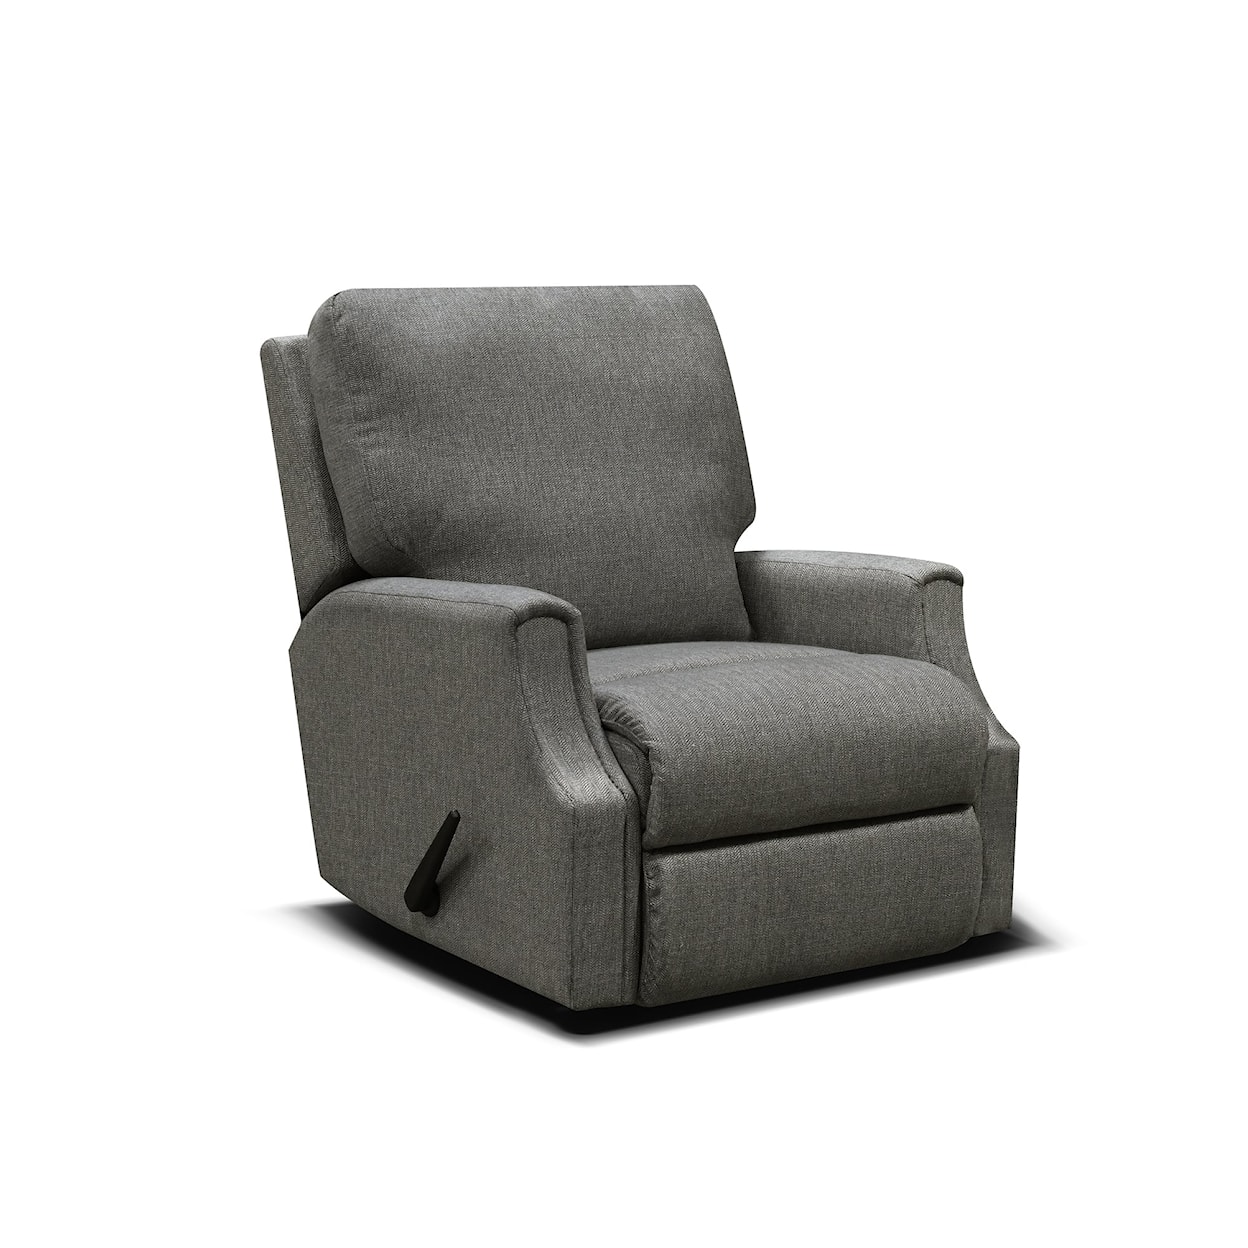 Tennessee Custom Upholstery EZ1650/AL/N Series Minimum Proximity Recliner